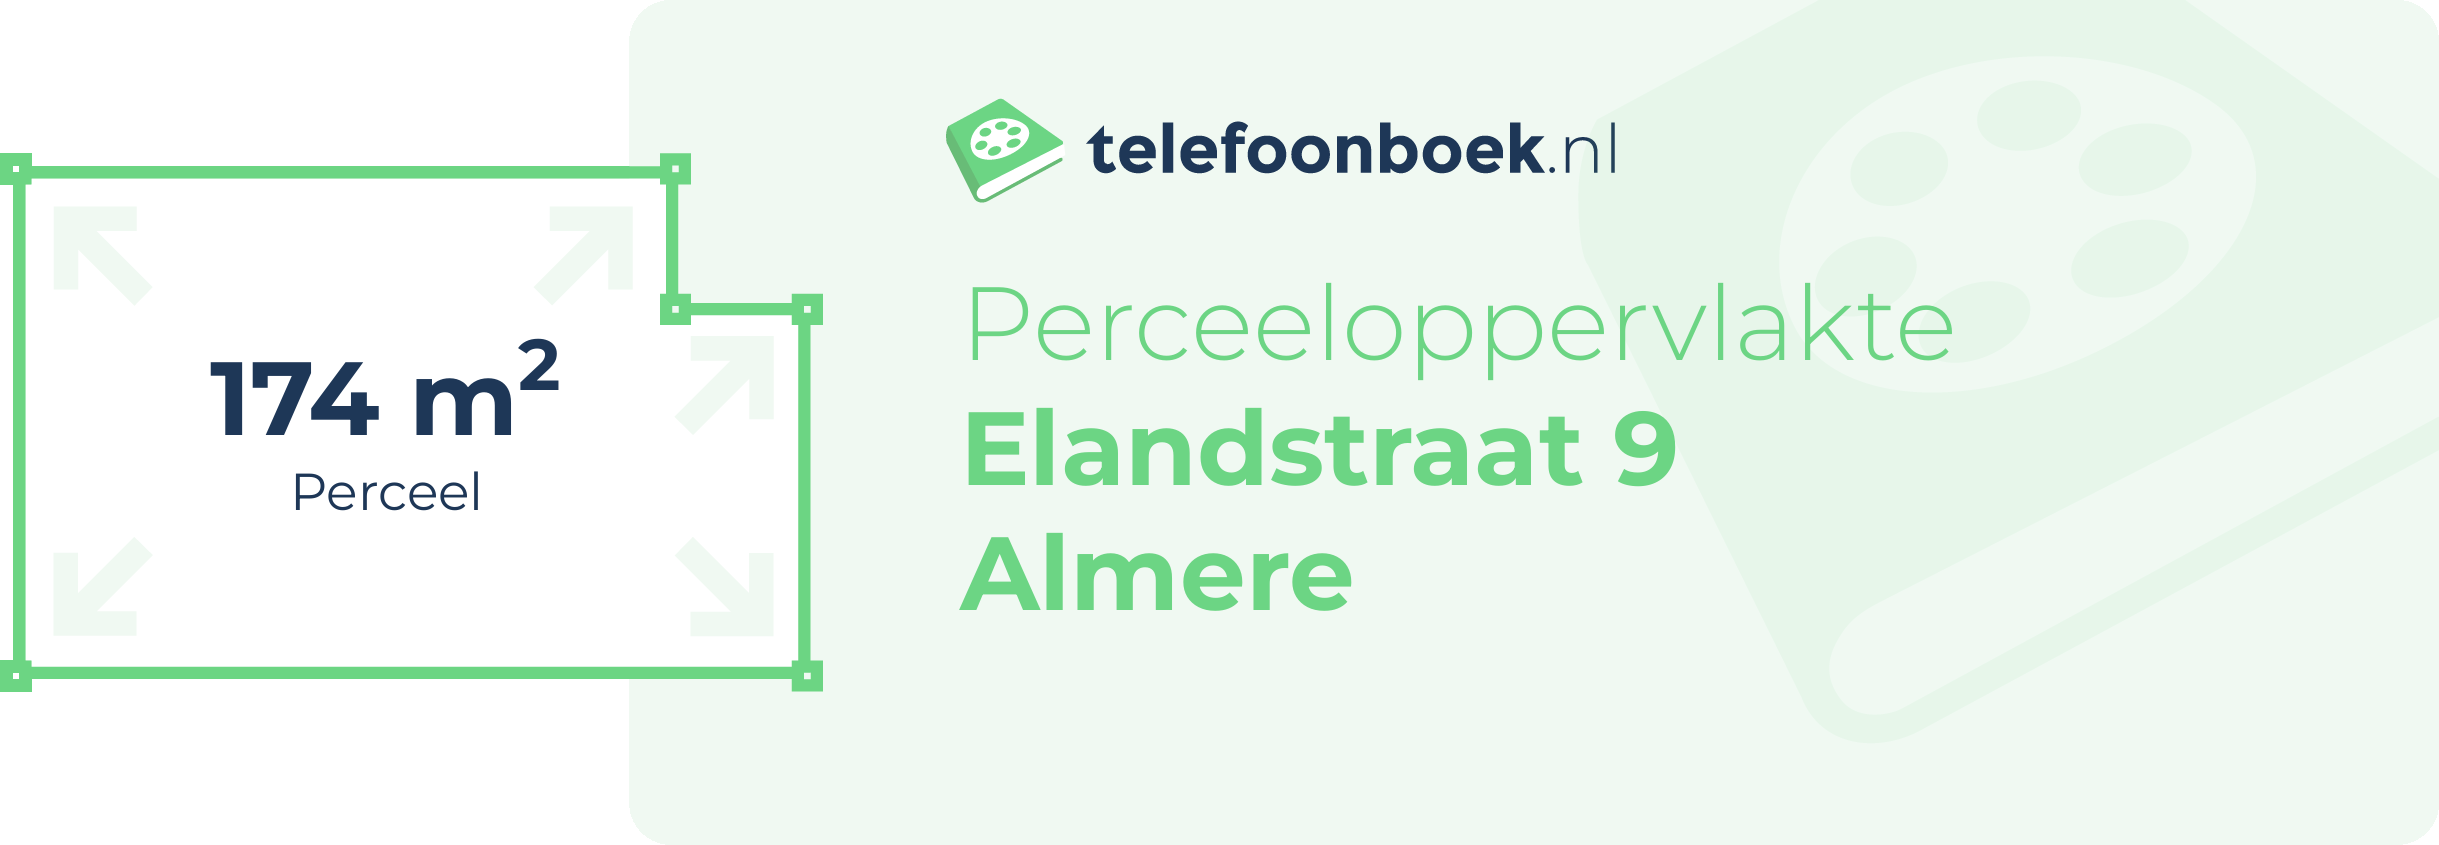 Perceeloppervlakte Elandstraat 9 Almere